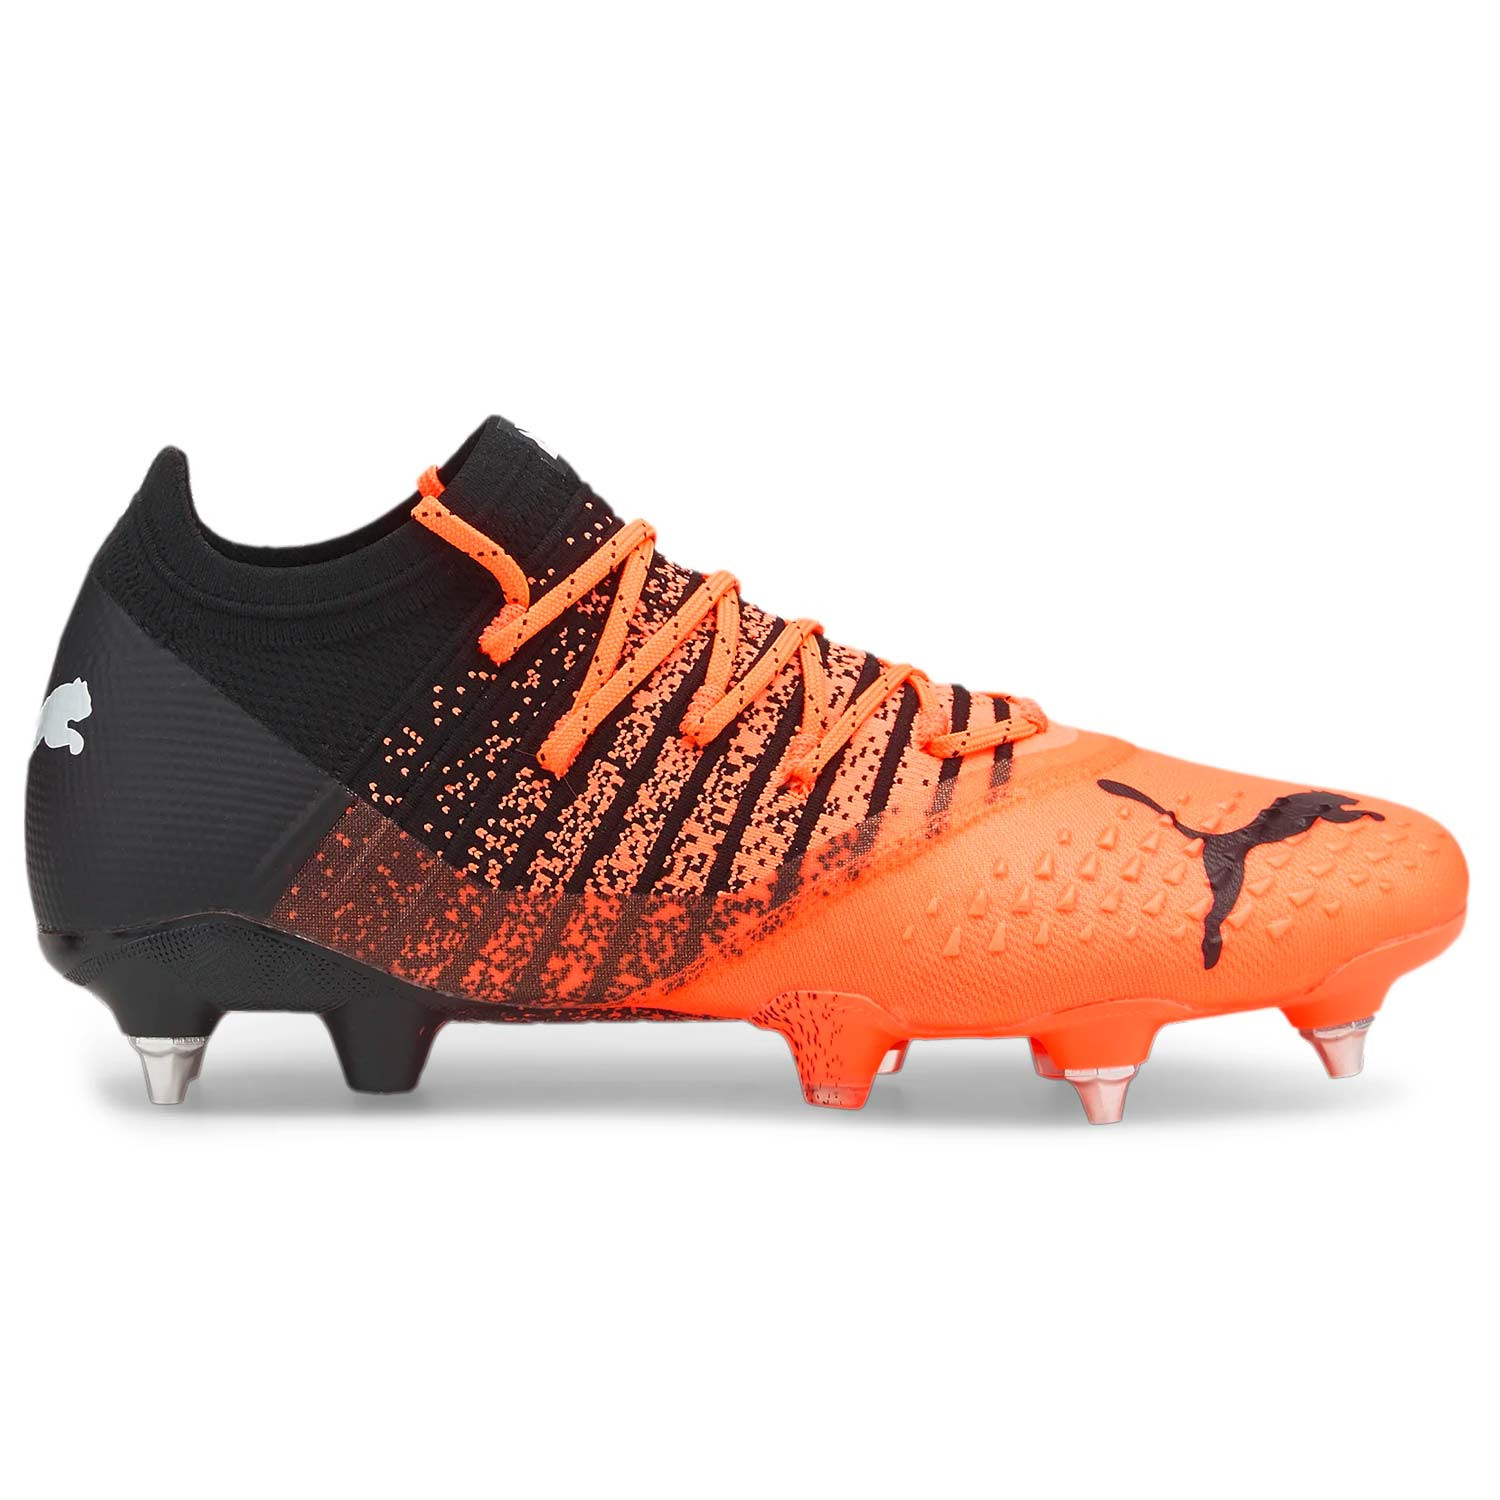 Botas de fútbol Puma Future Z 1.3 MxSG naranja, negro